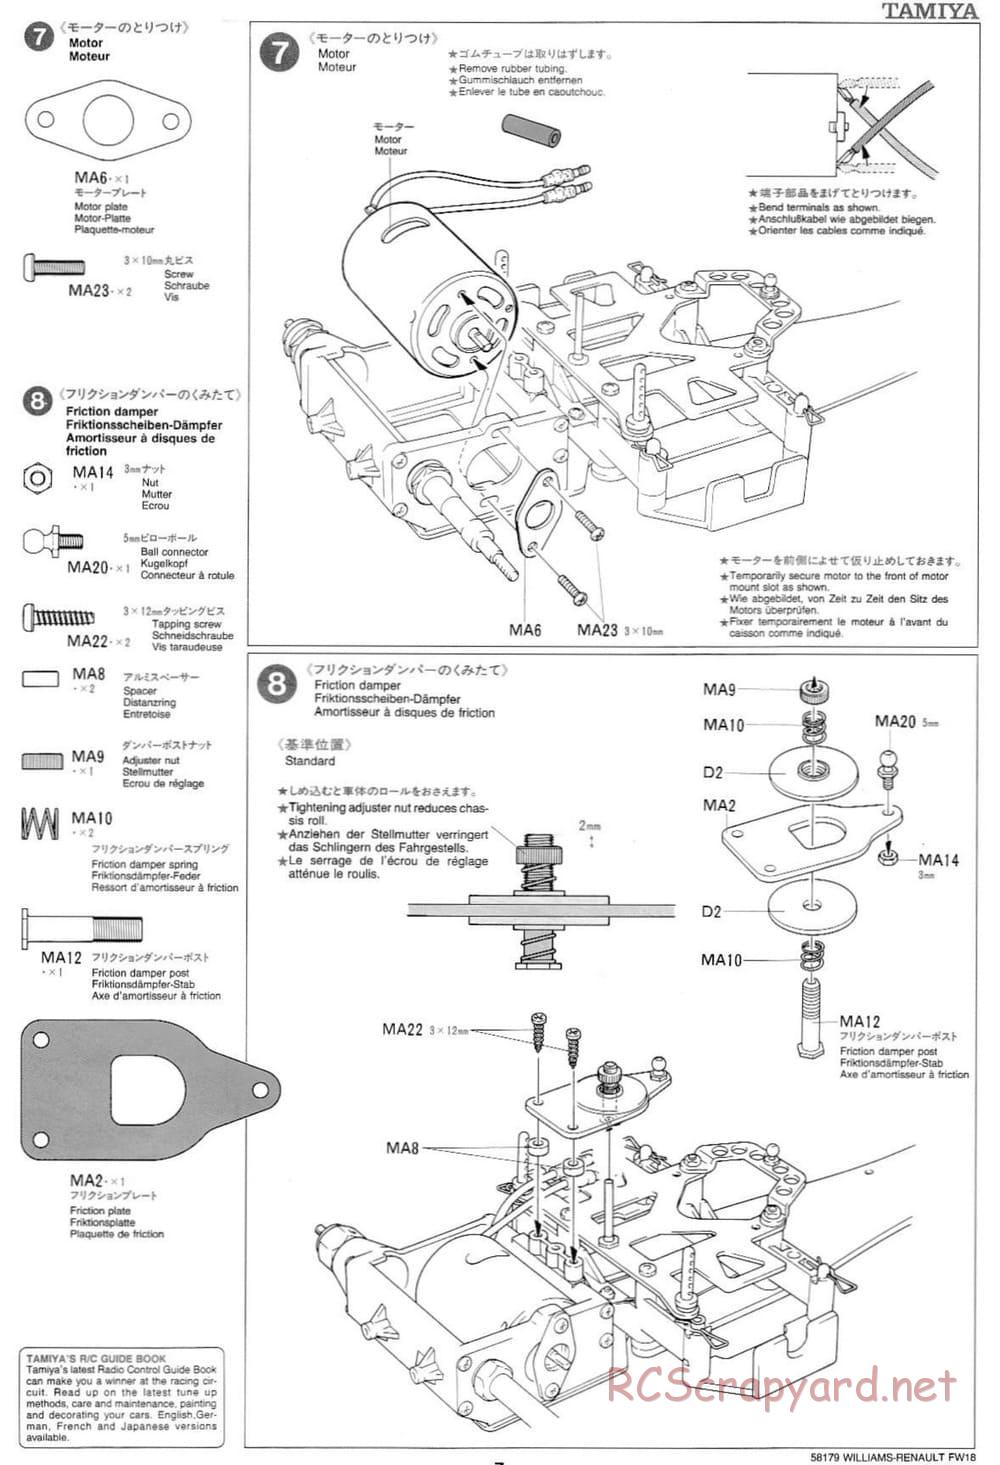 Tamiya - Williams Renault FW18 - F103RS Chassis - Manual - Page 7